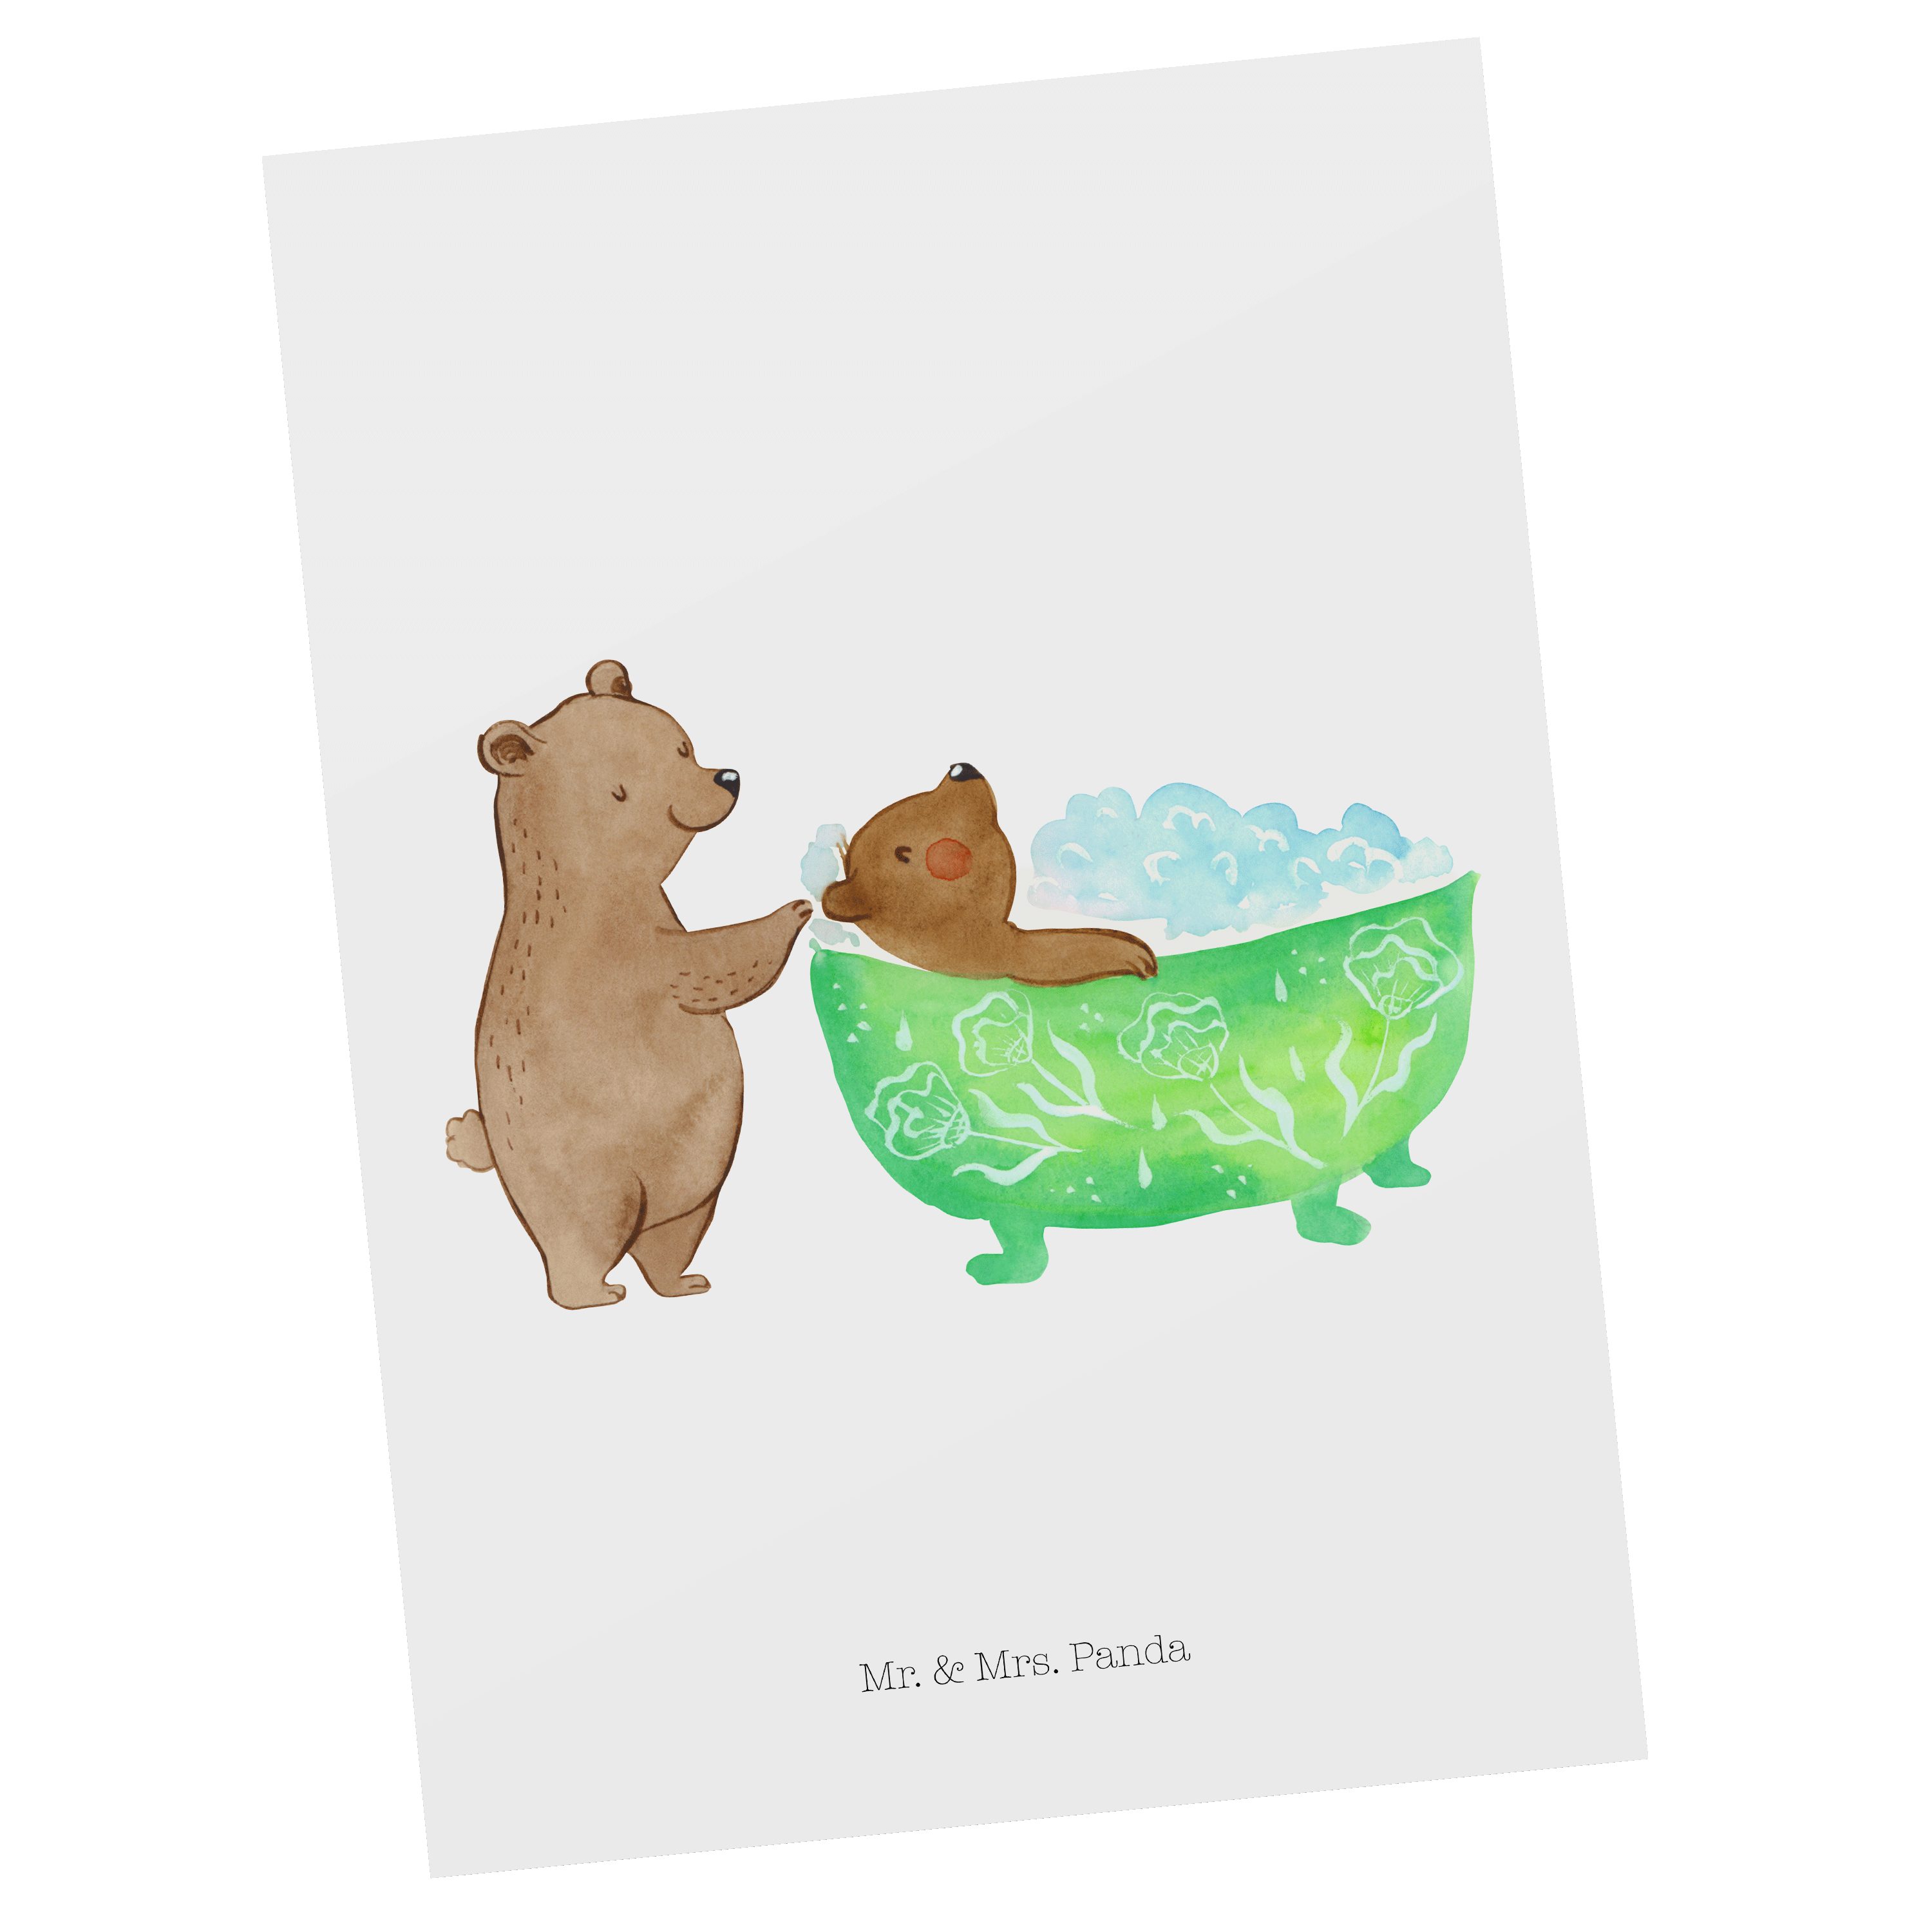 Mr. & Mrs. Panda Postkarte Oma badet - Weiß - Geschenk, Opa, Wellness, Familie, Dankeskarte, Ein